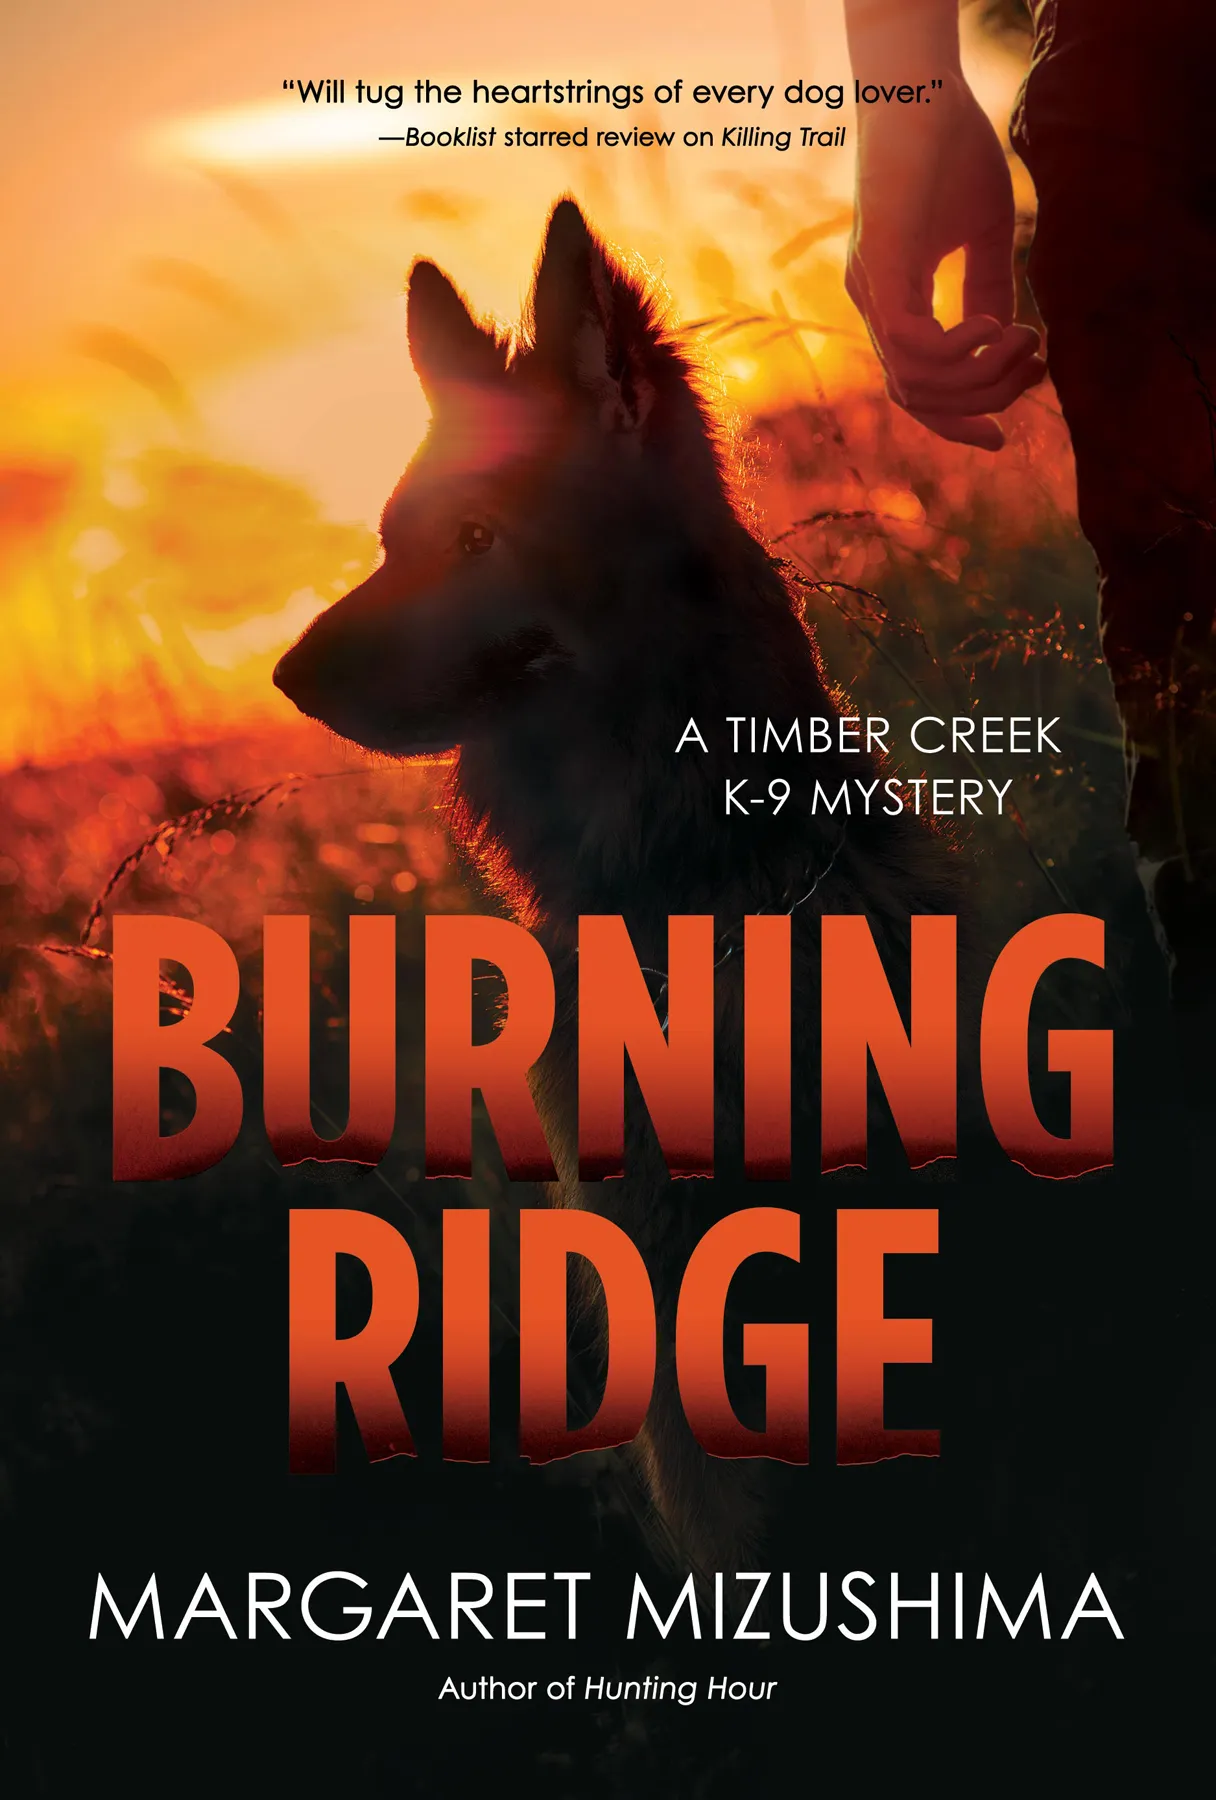 Burning Ridge (A Timber Creek K-9 Mystery #4)